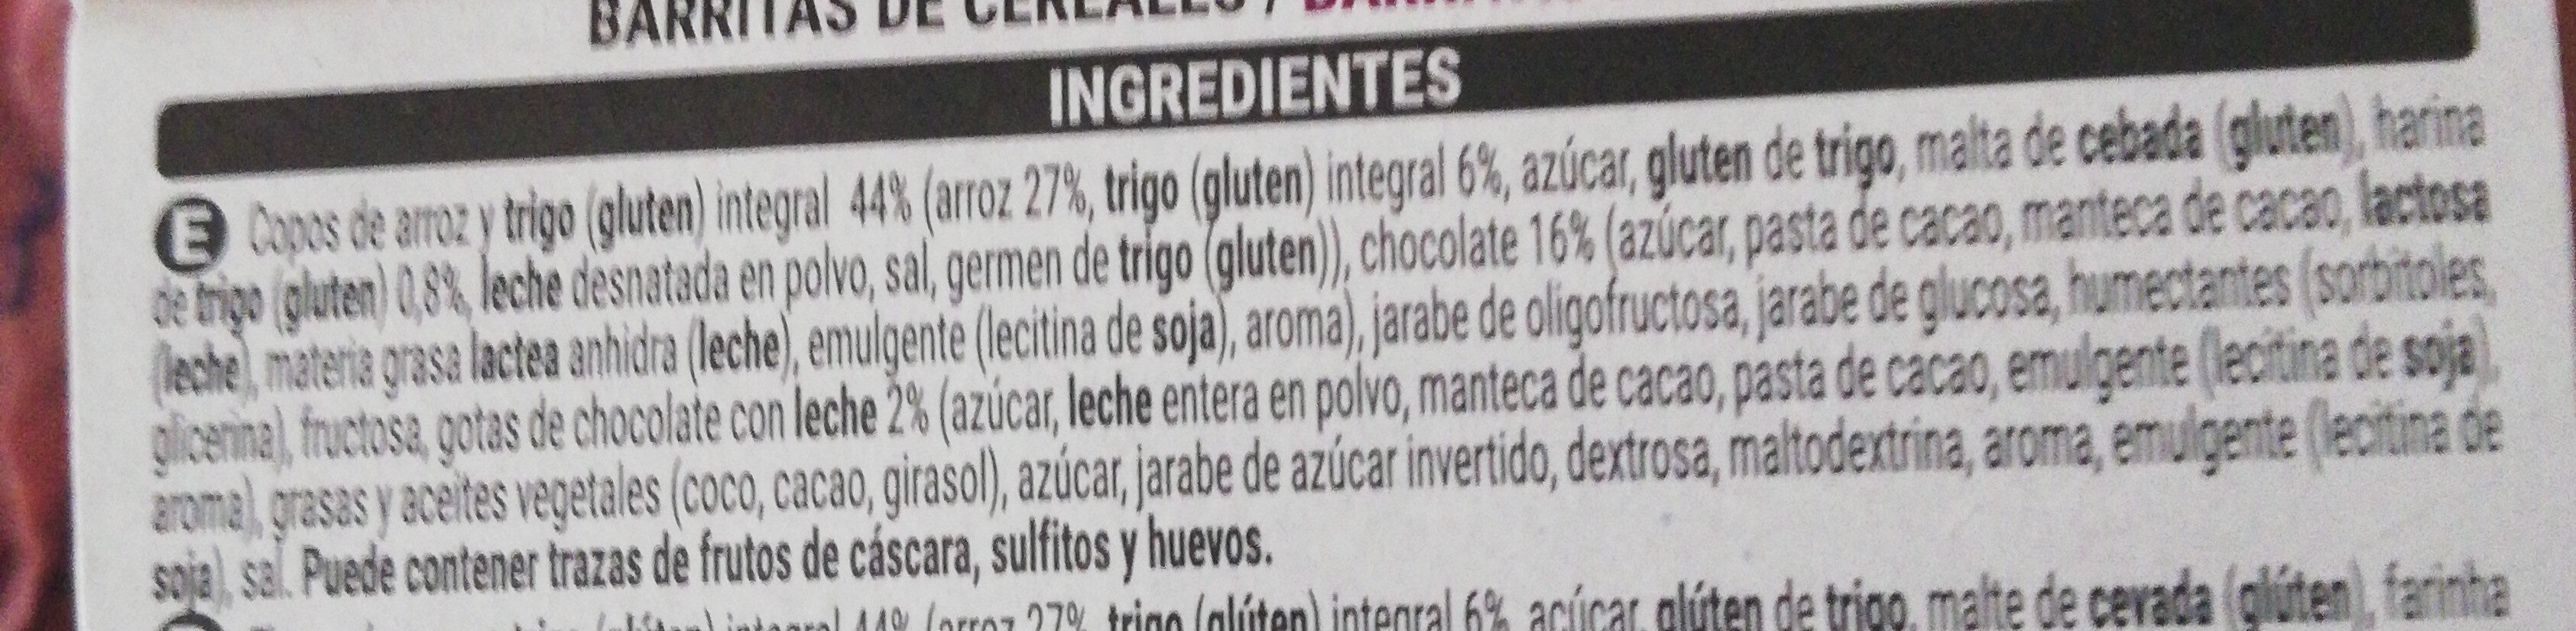 Barritas chocolate leche - Ingredients - es